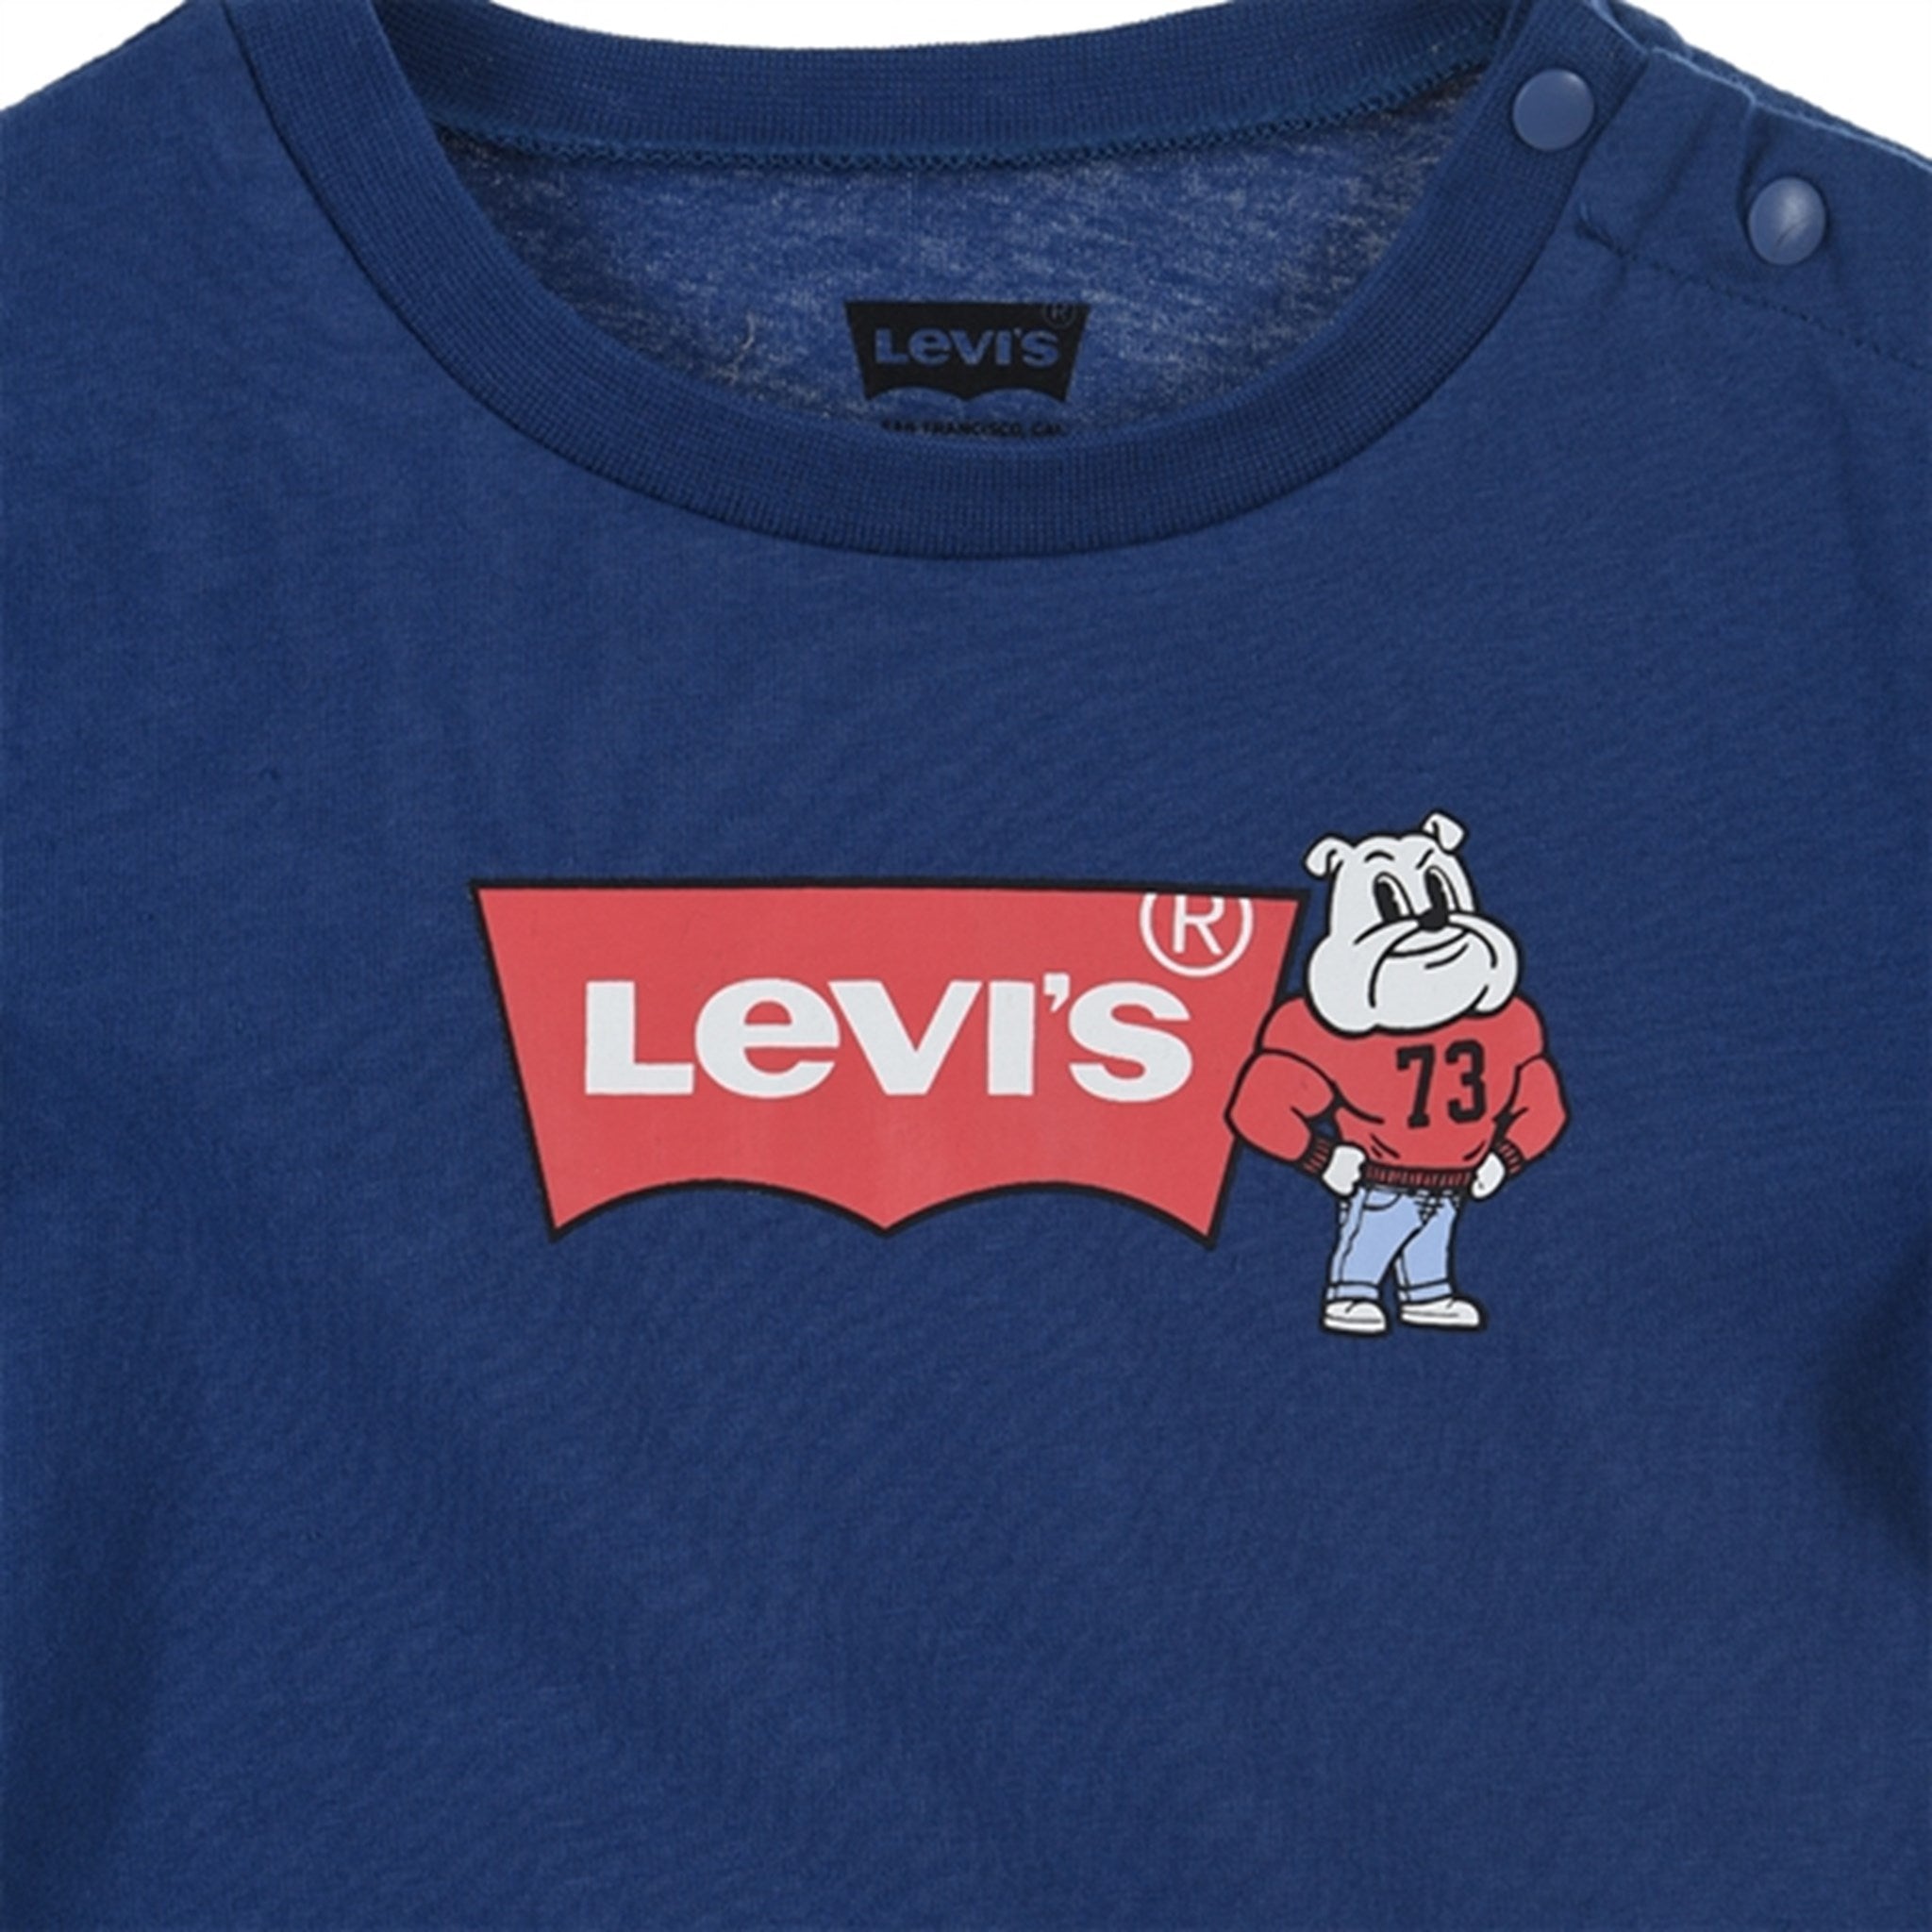 Levi's Mascot Batwing Shorts Set Blue 3